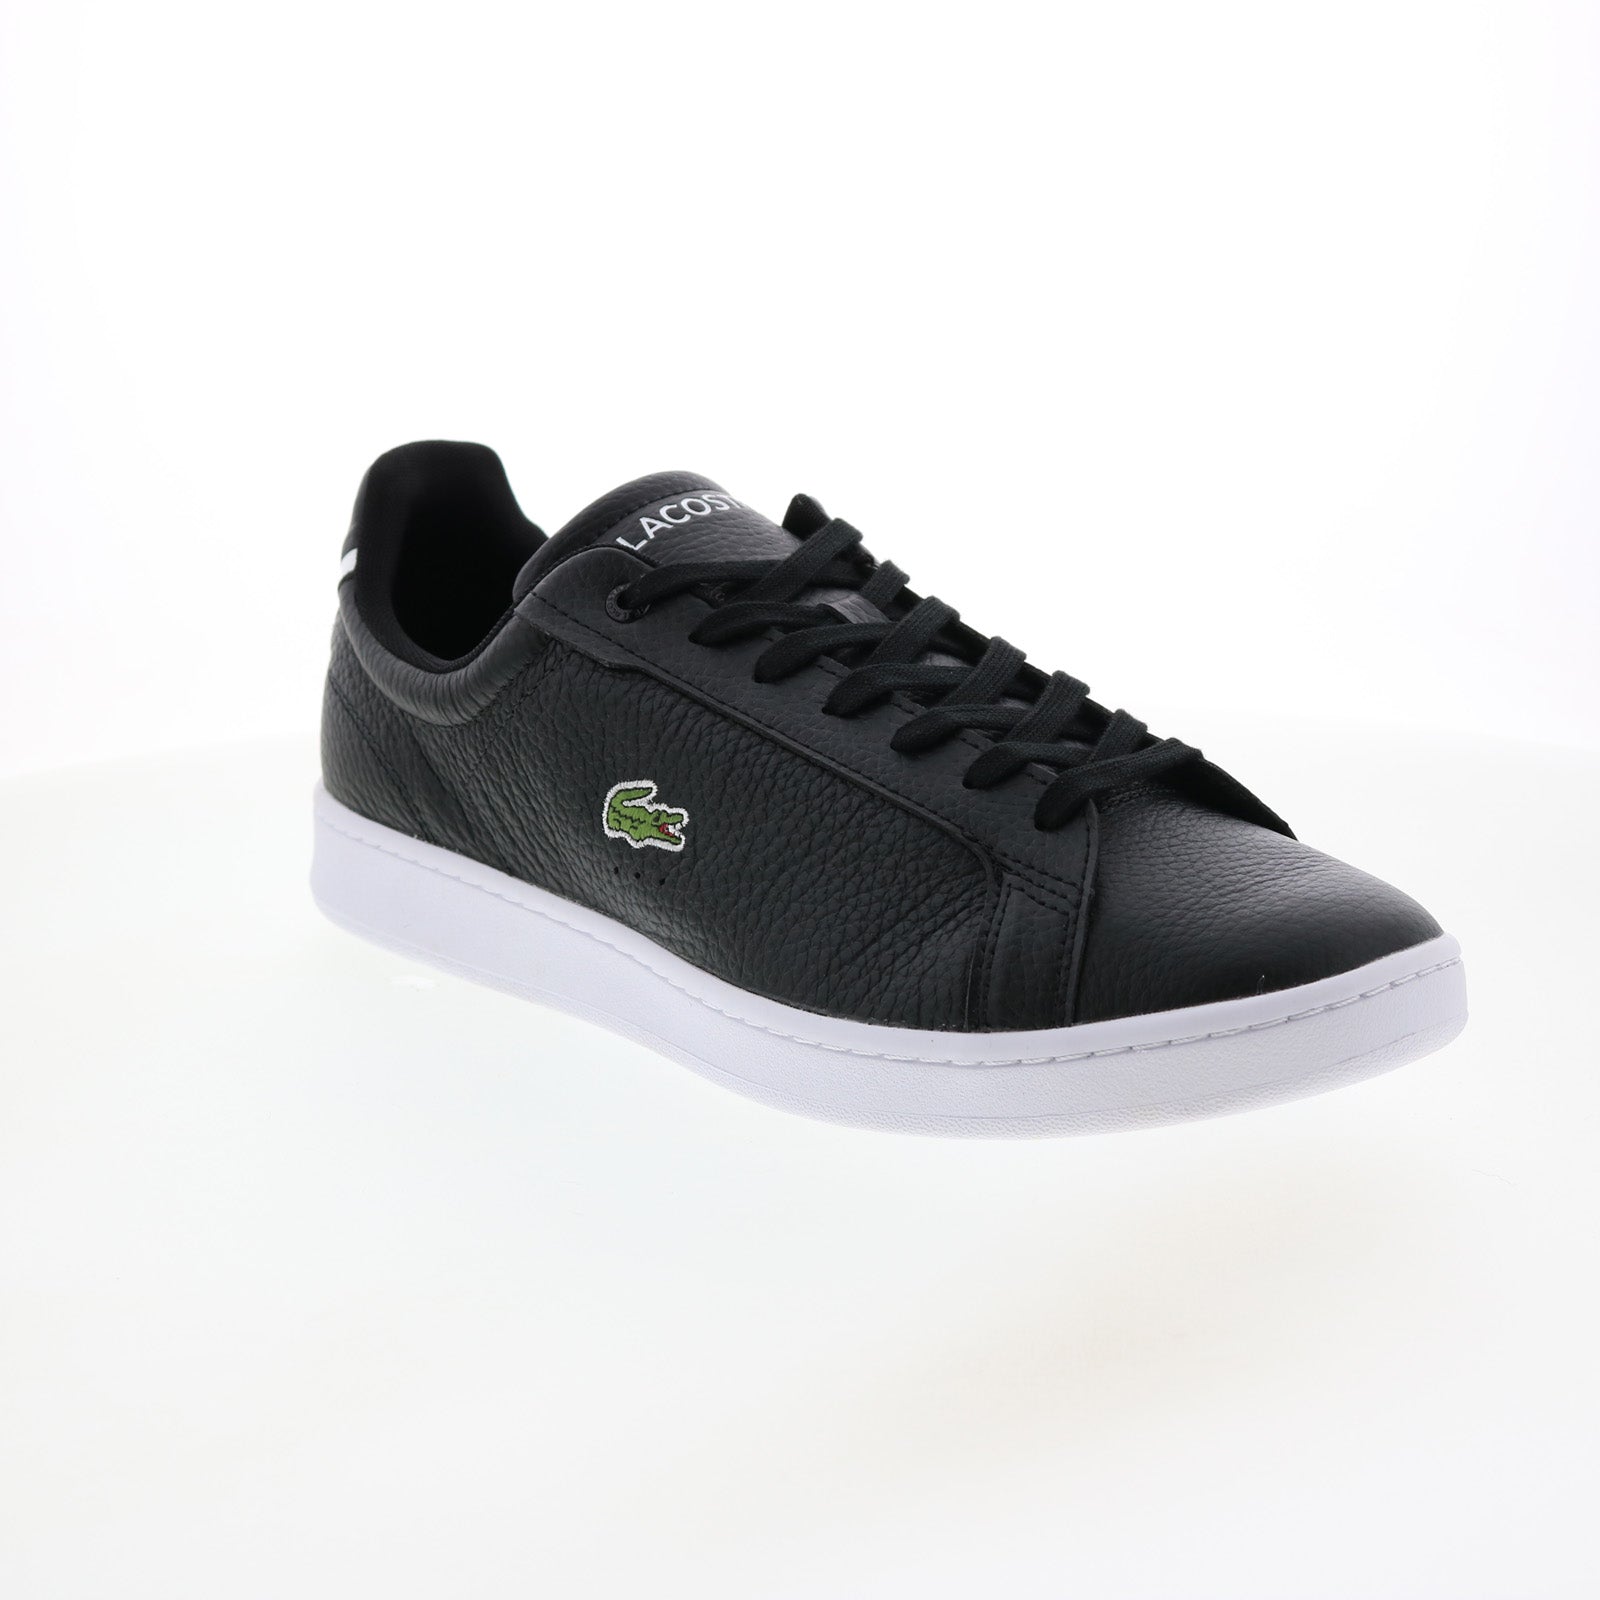 Lacoste Men's Game Advance Luxe Leather Sneakers, Black & White, 10.5 US -  Amazon.com